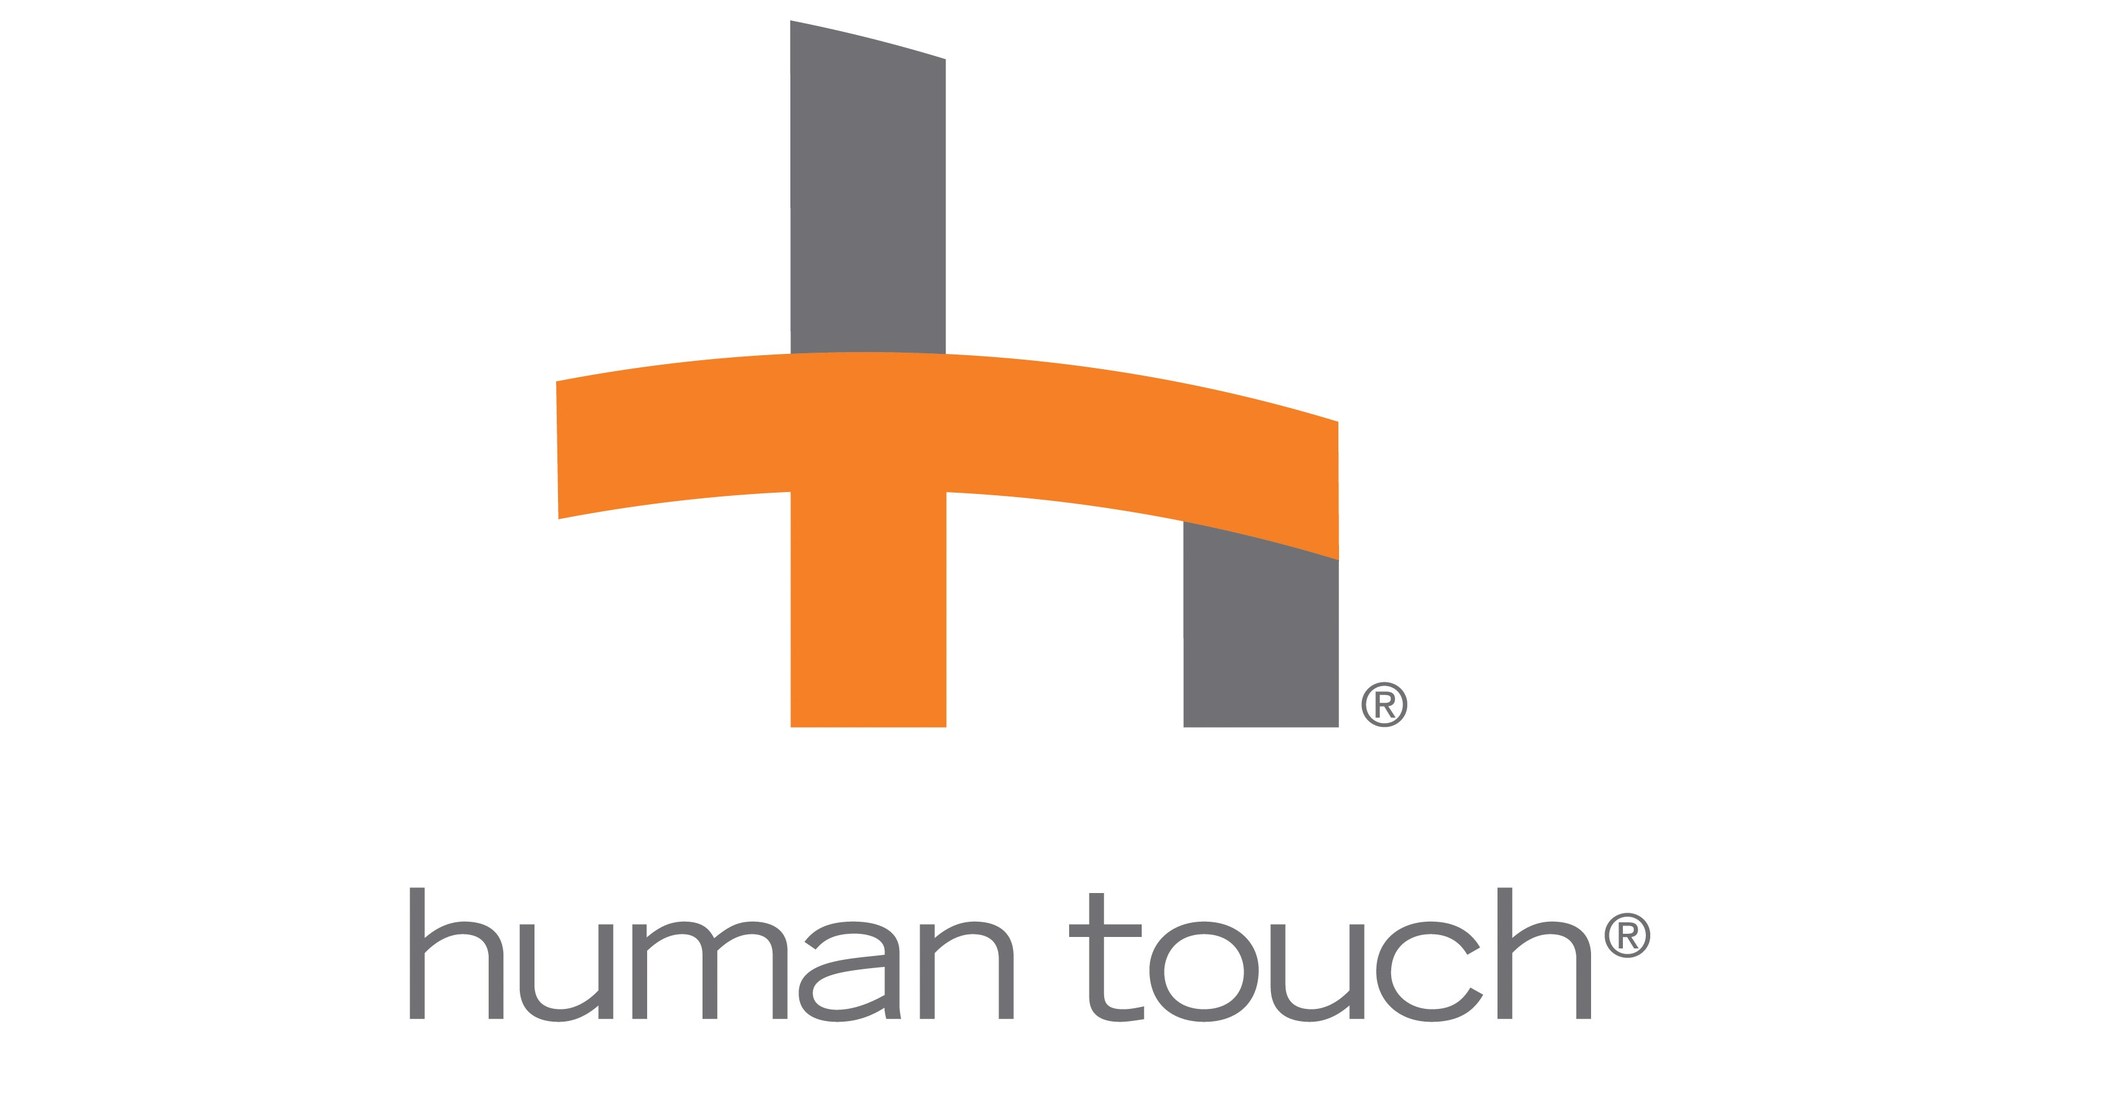 Human touch logo